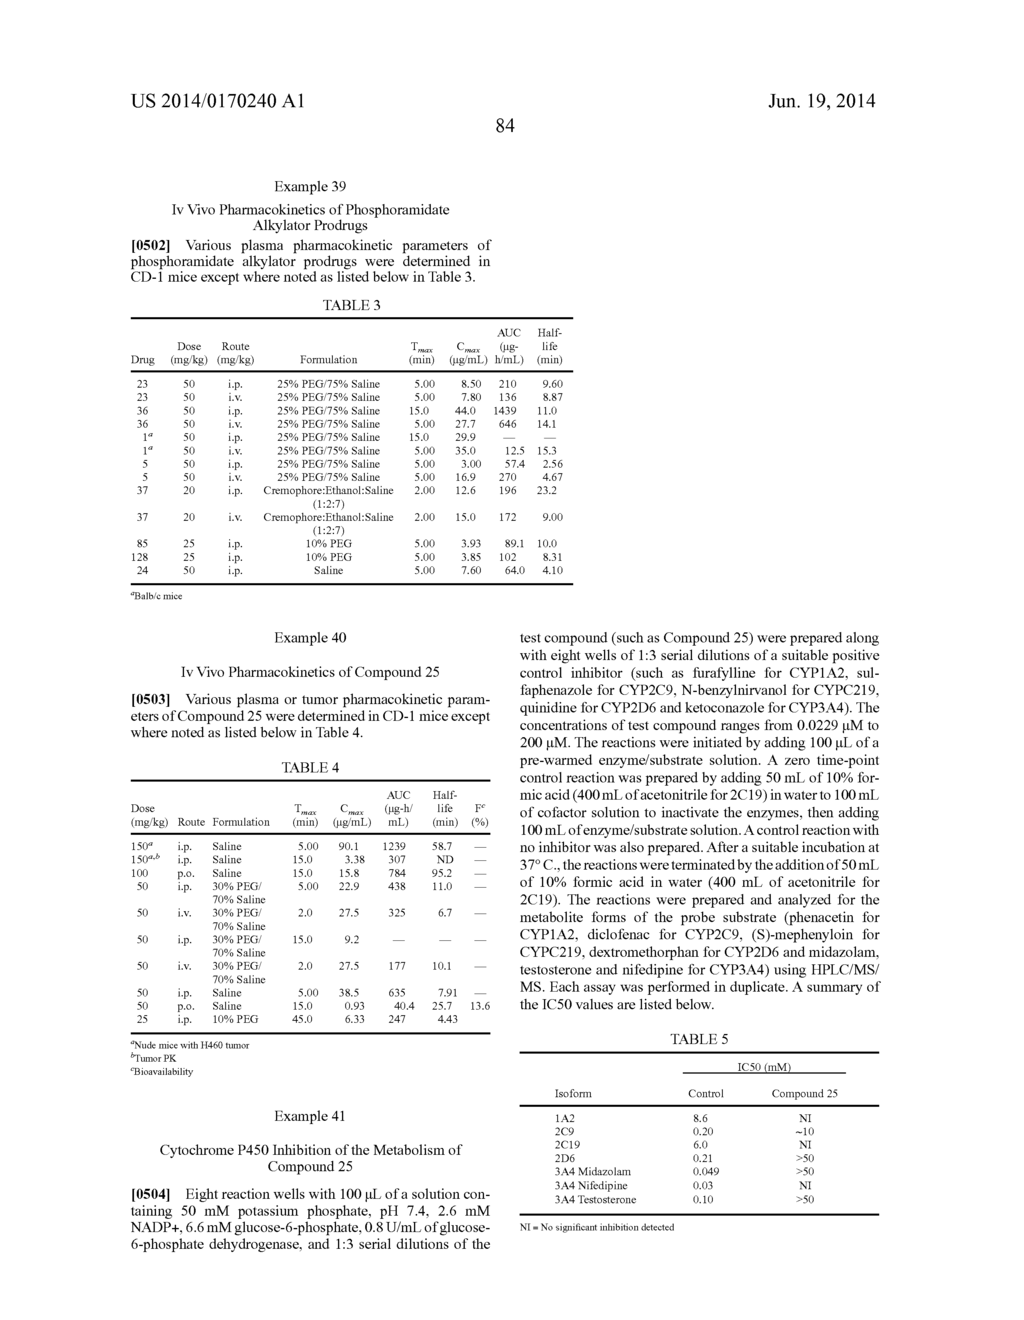 Phosphoramidate Alkylator Prodrugs - diagram, schematic, and image 92